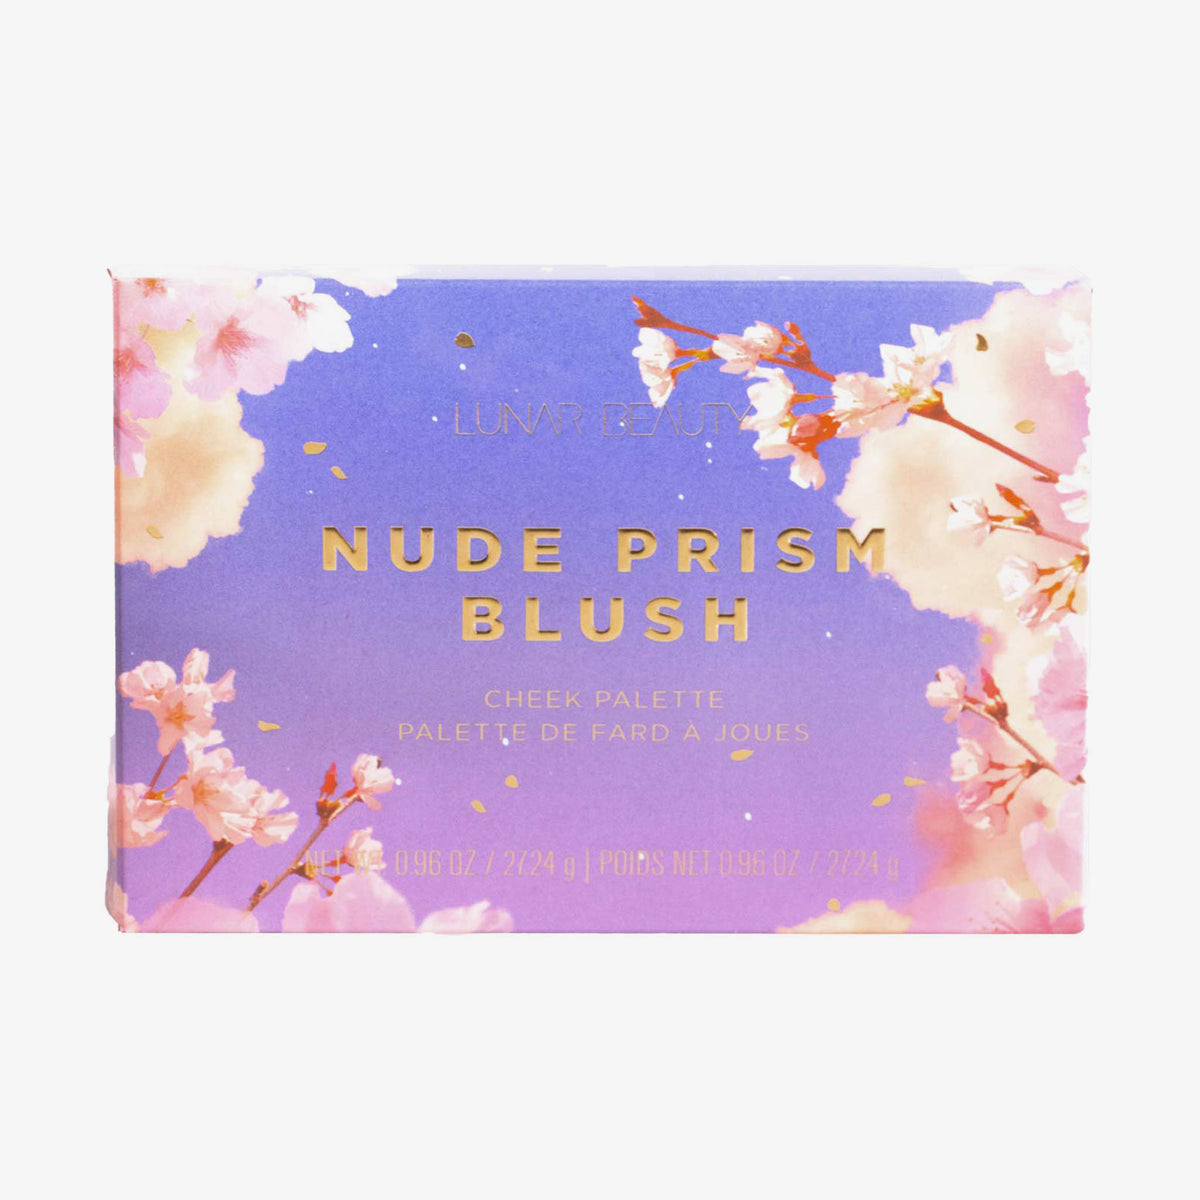 Nude Prism Blush Palette